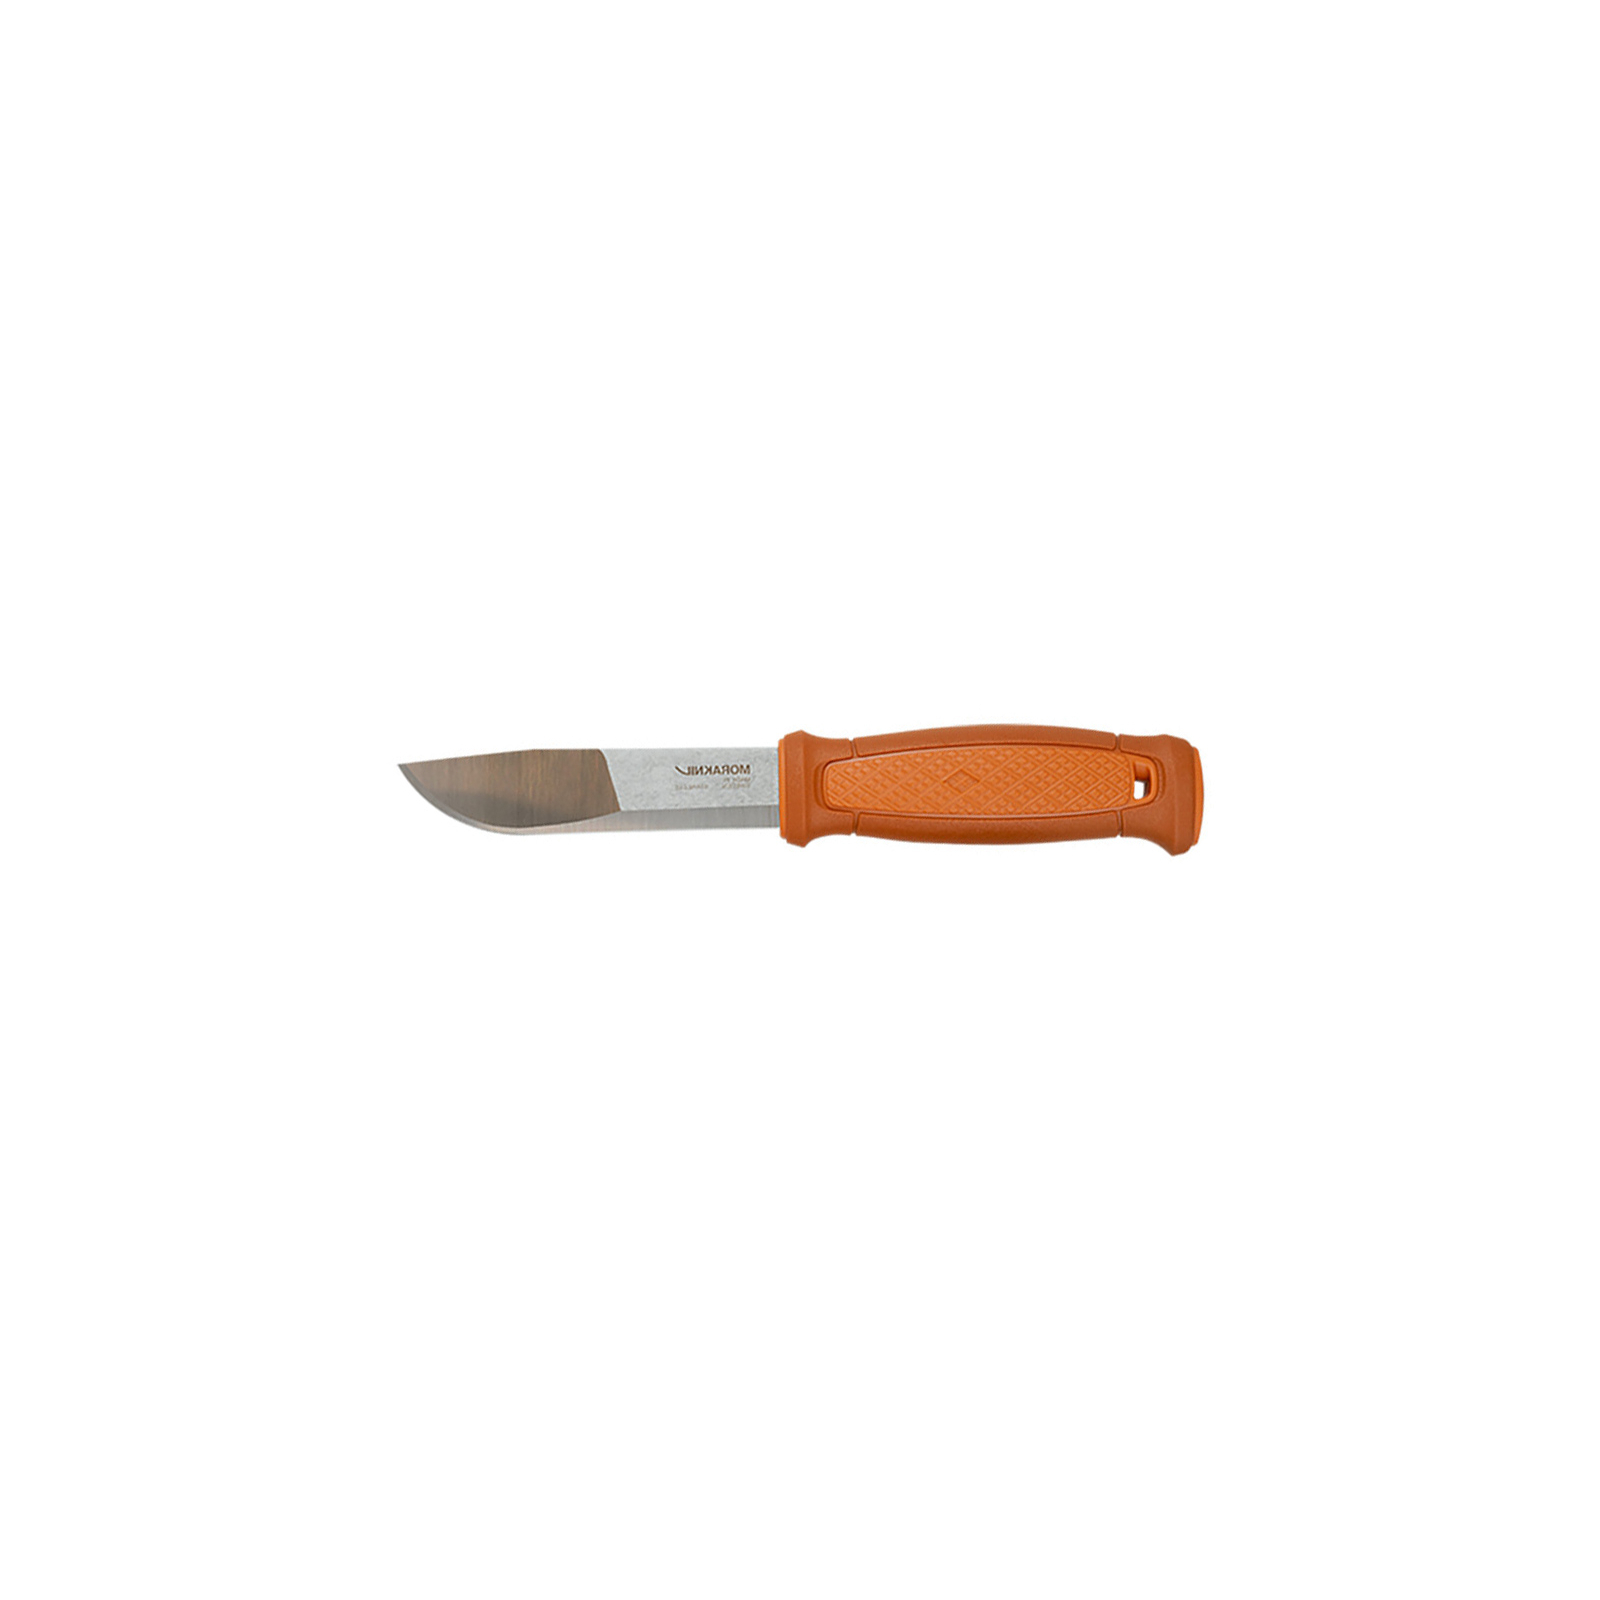 Нож Morakniv Kansbol Multi-Mount stainless steel Orange (13507)